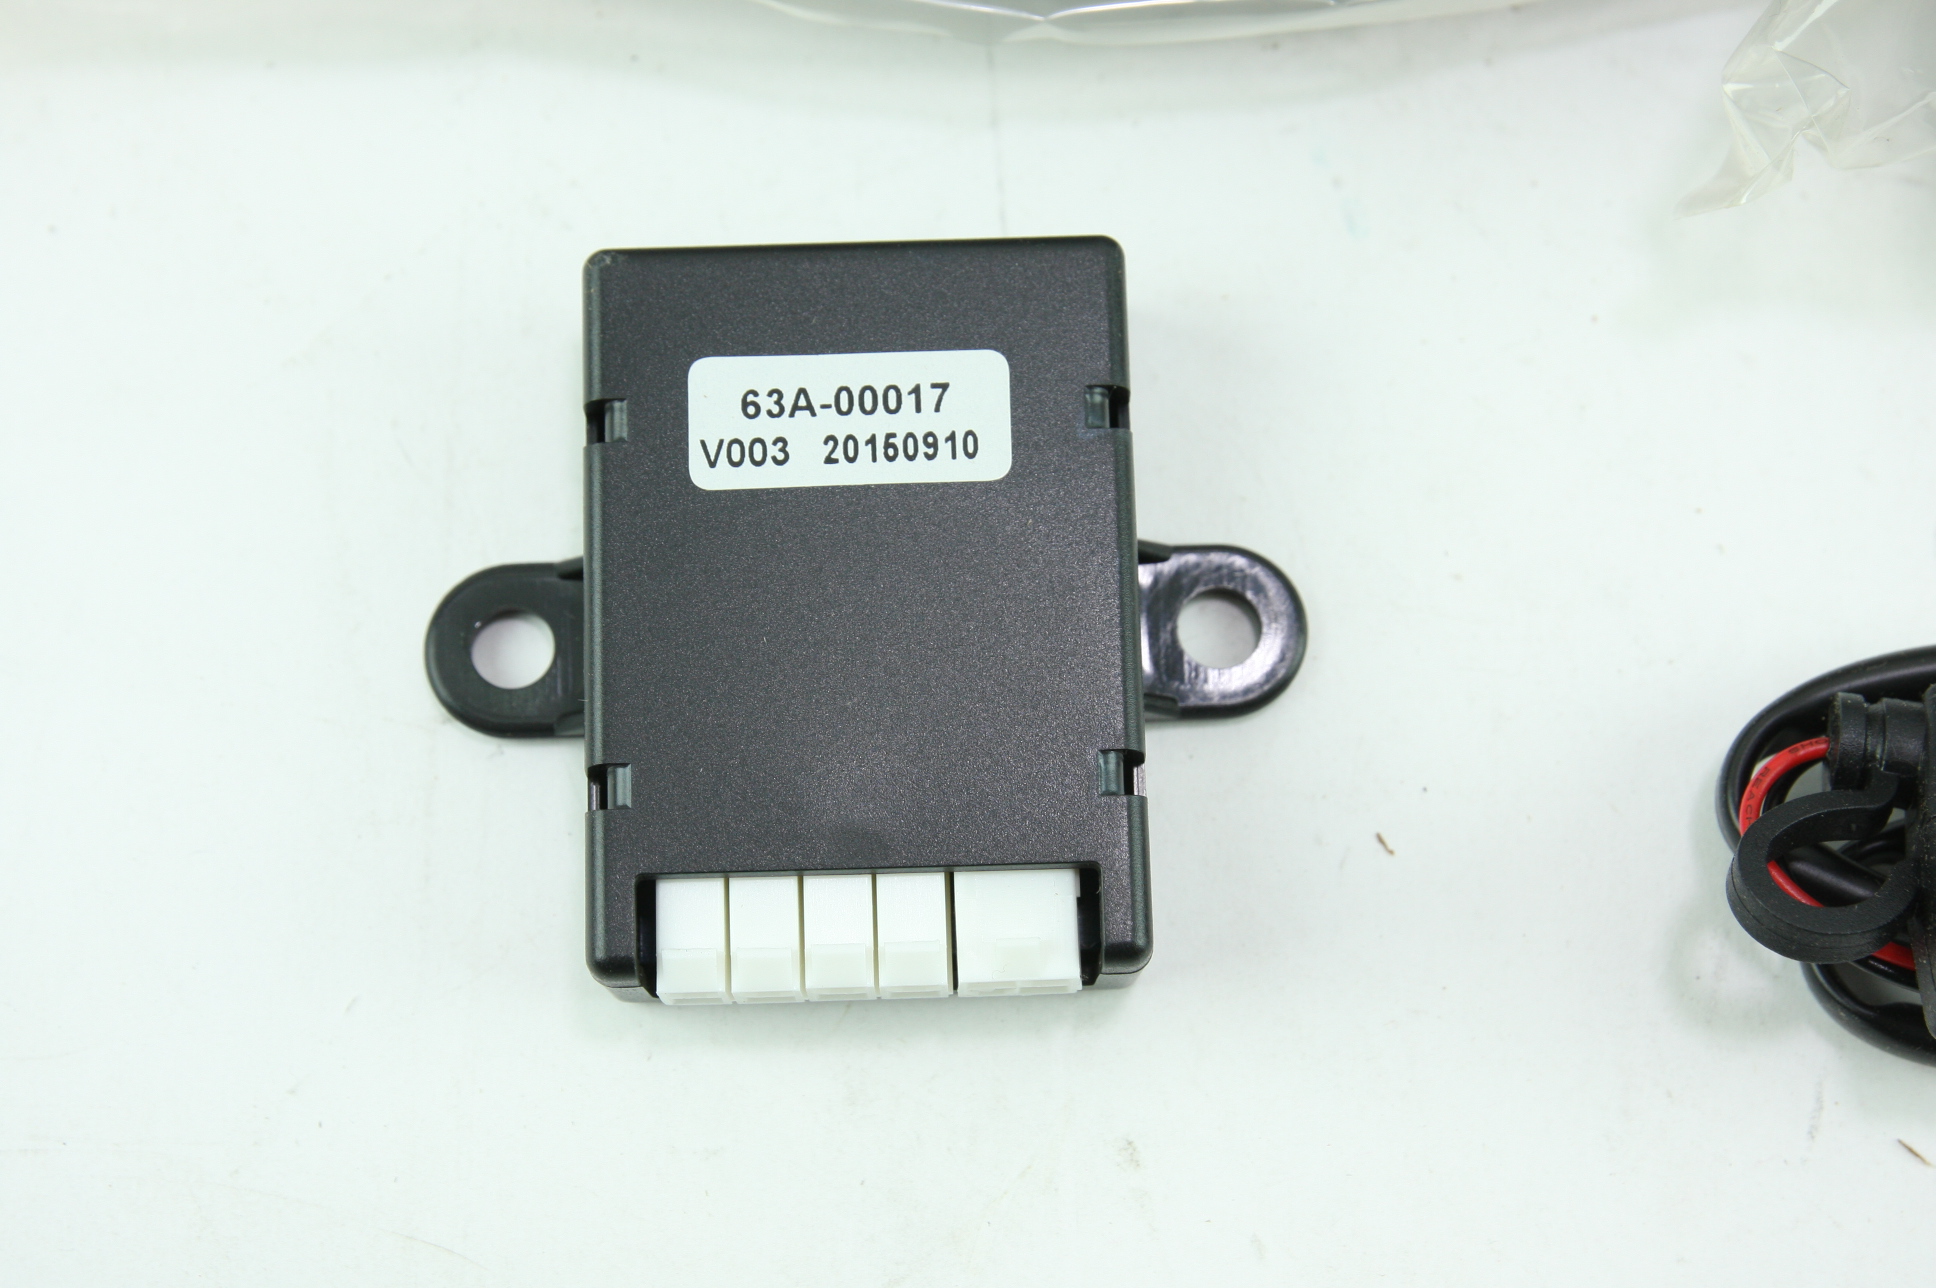 ** Genuine Kia 14-19 Soul Exterior LED Lighting Kit New OEM Packaging B2067ADU01 - image 3